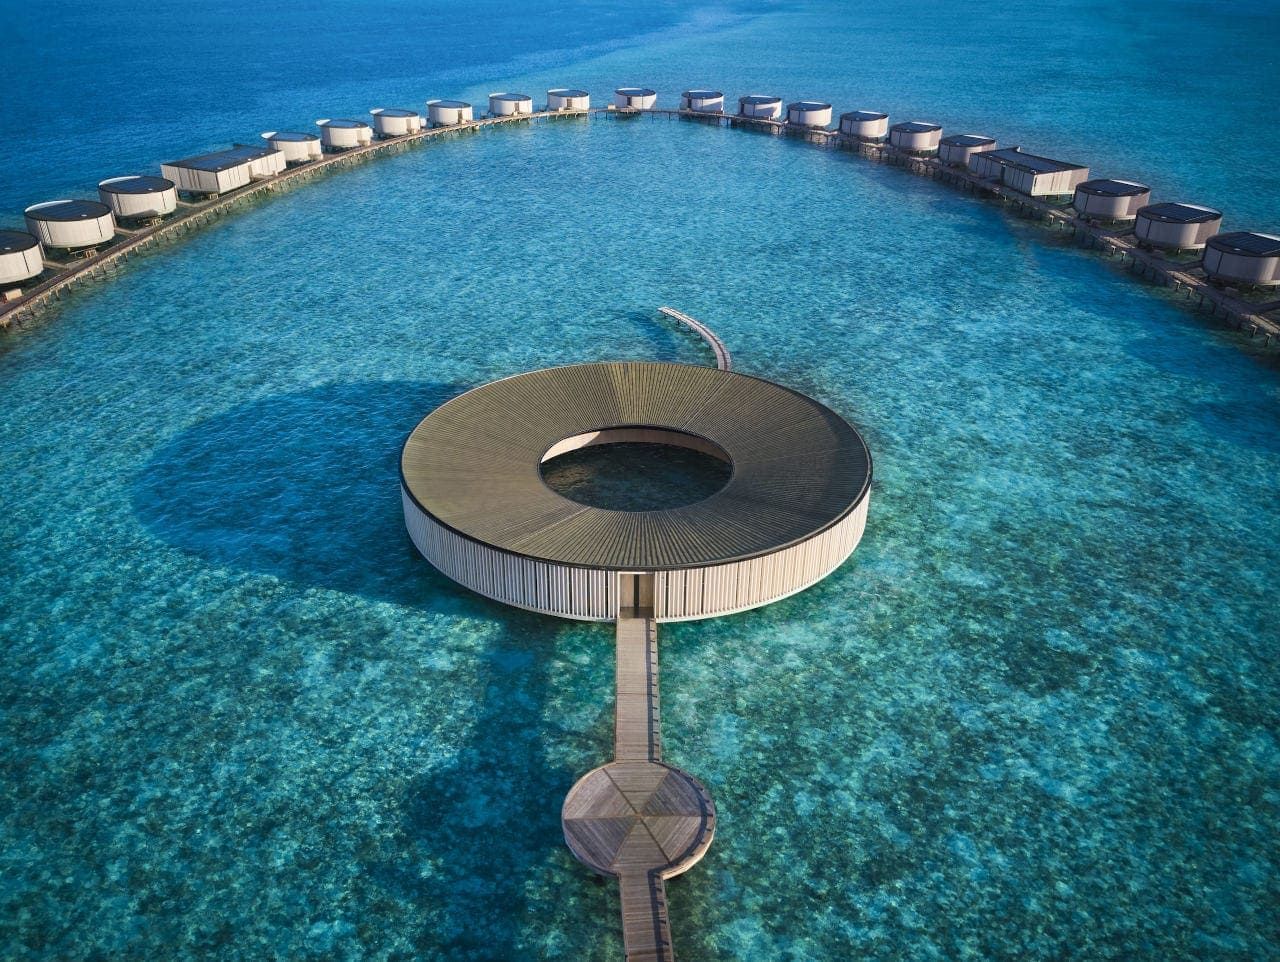 The Ritz Carlton Maldives Fari Islands The Ritz Carlton Spa Aerial View